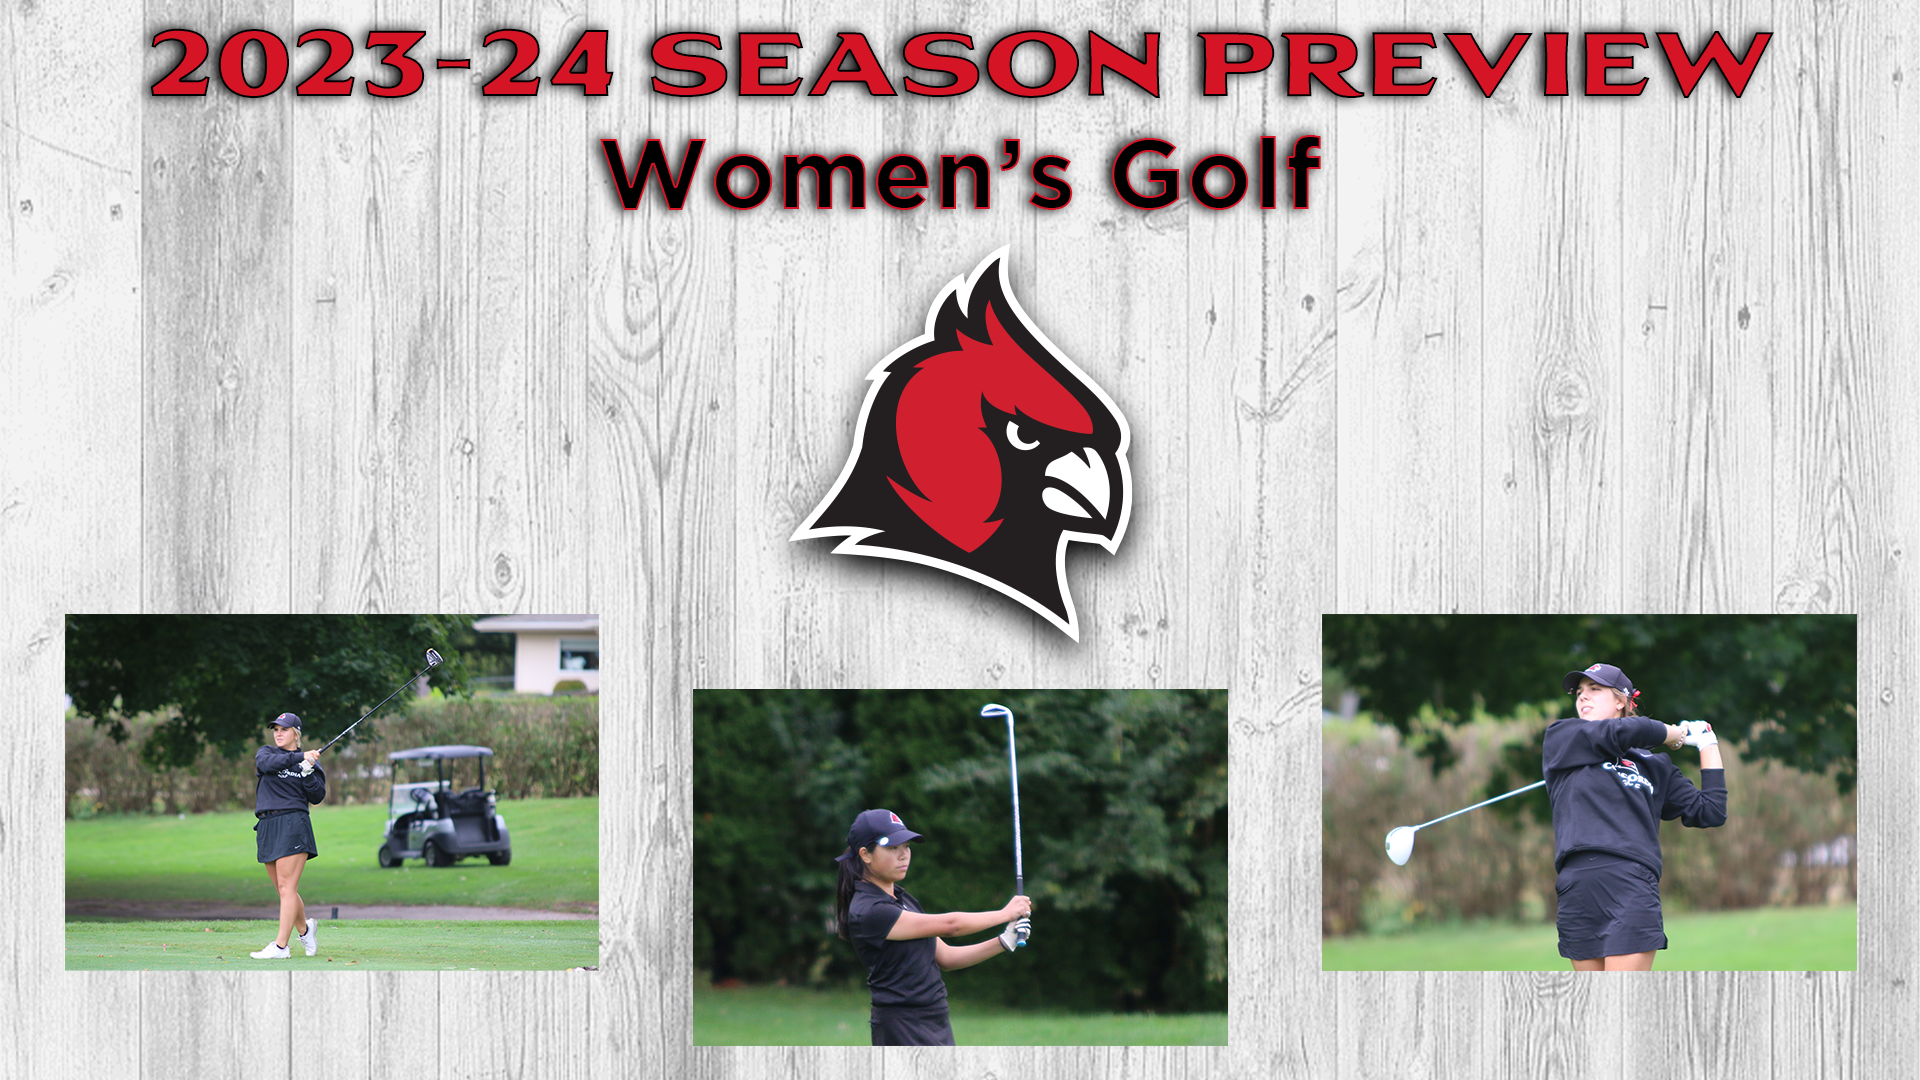 SEASON PREVIEW: Women’s Golf begins season on the road at IU East Fall Invitational